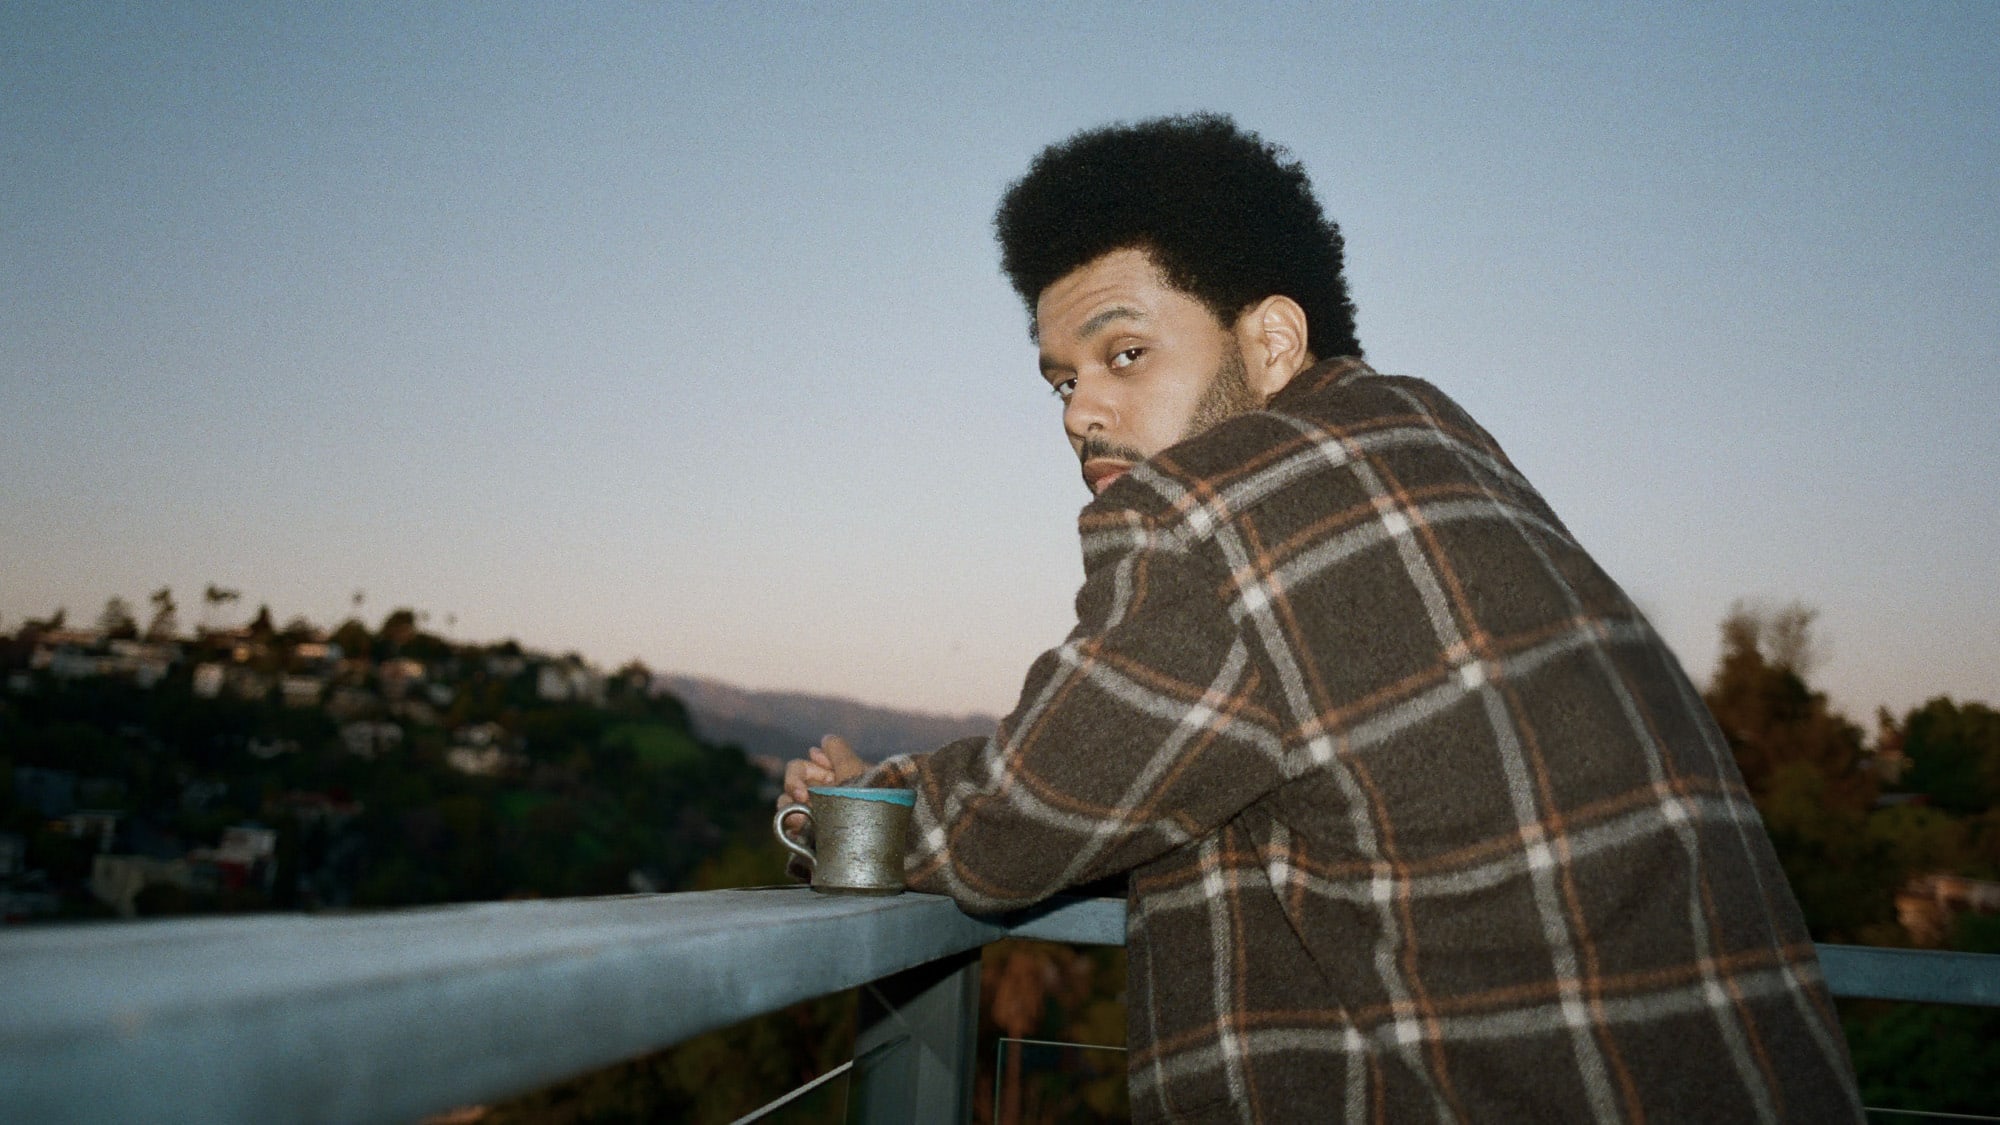 Photograph of Abel "The Weeknd" Tesfaye